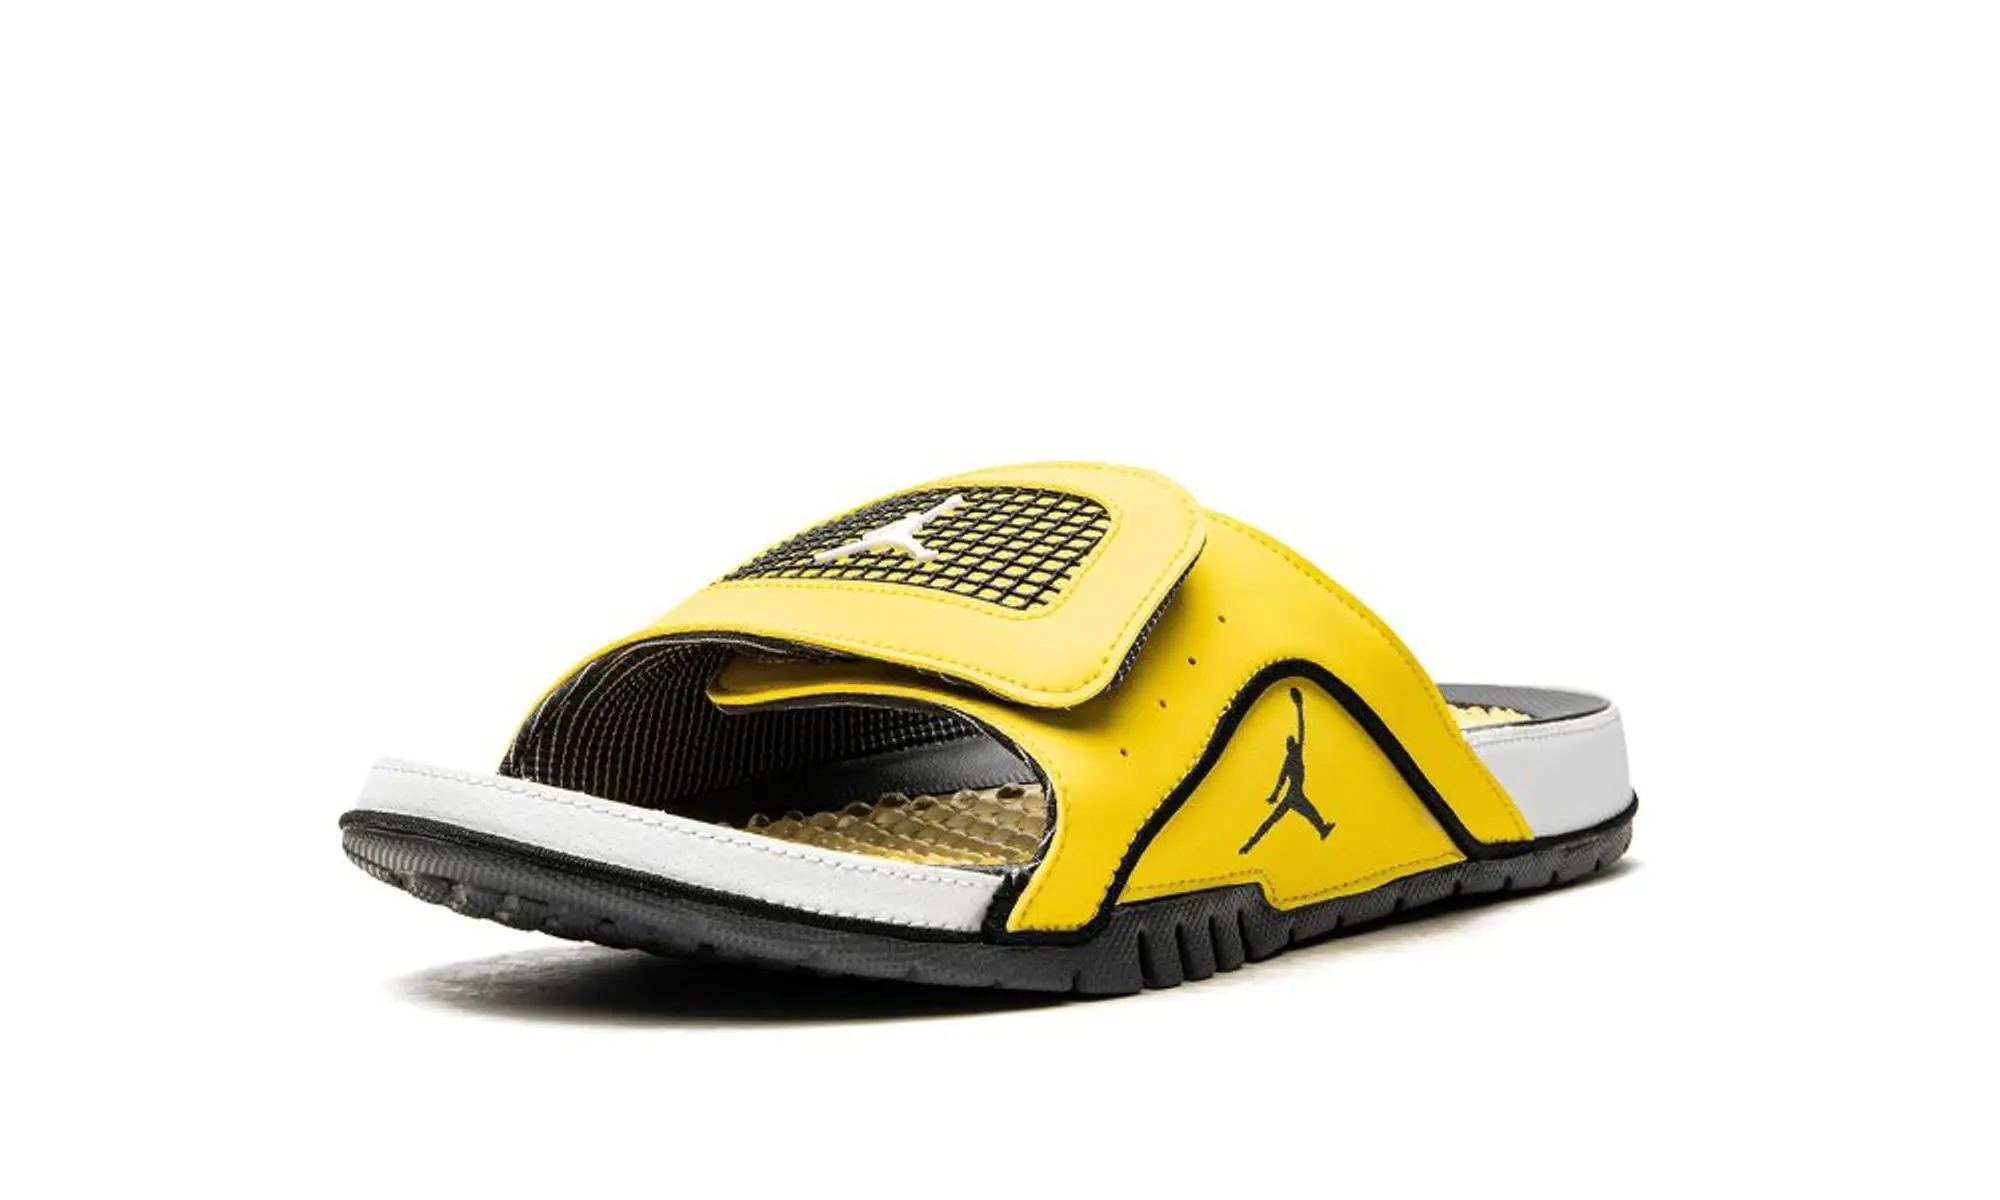 Nike Jordan Jordan Hydro Slide IV Lightning Shoes